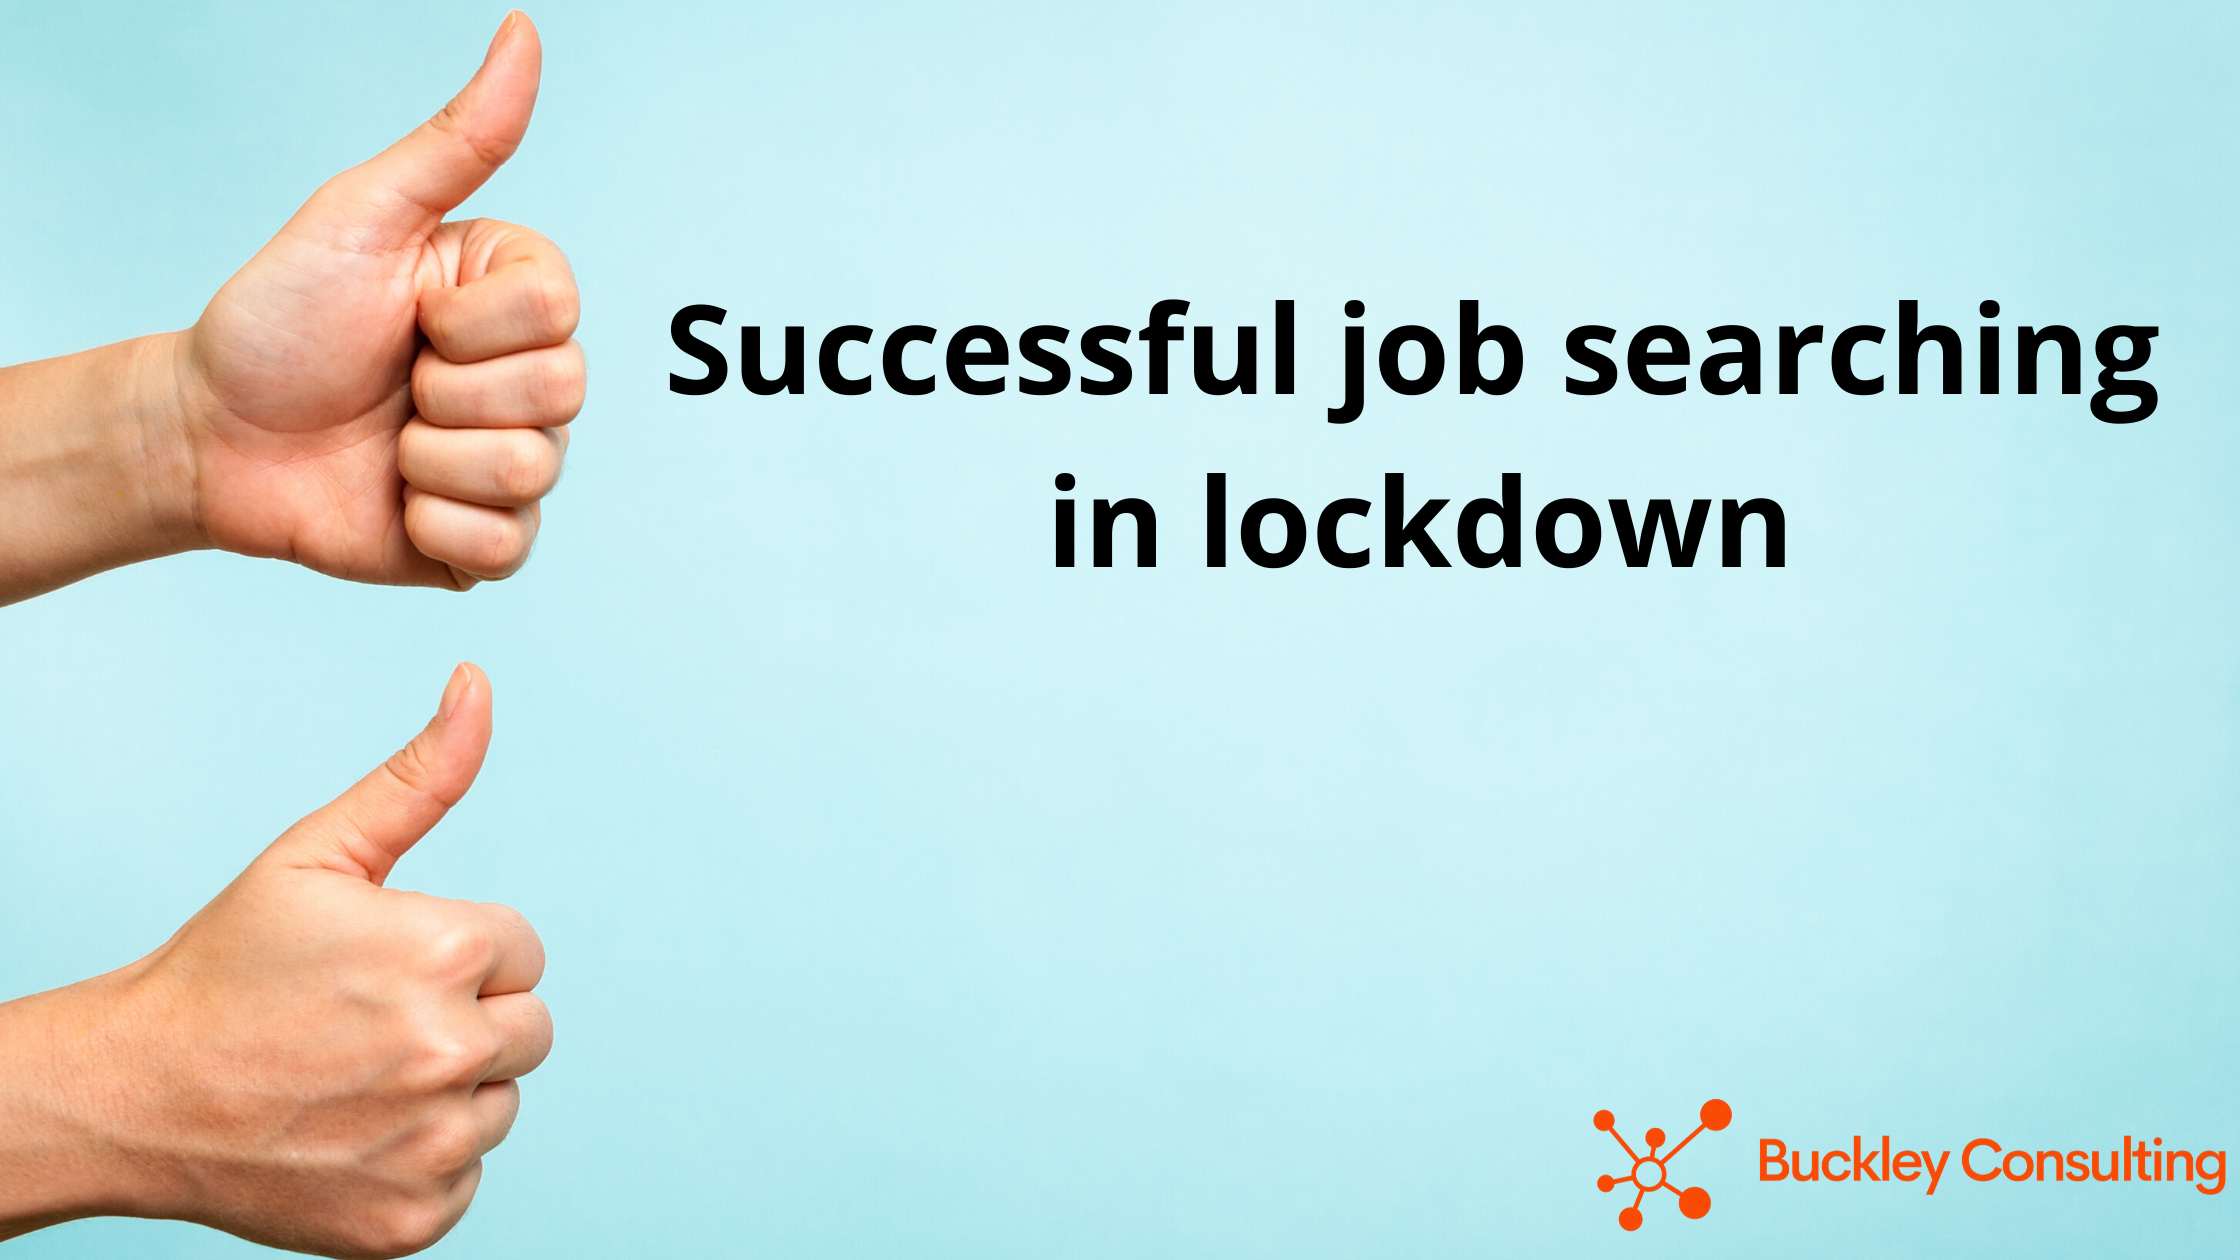 Successful job searching in lockdown